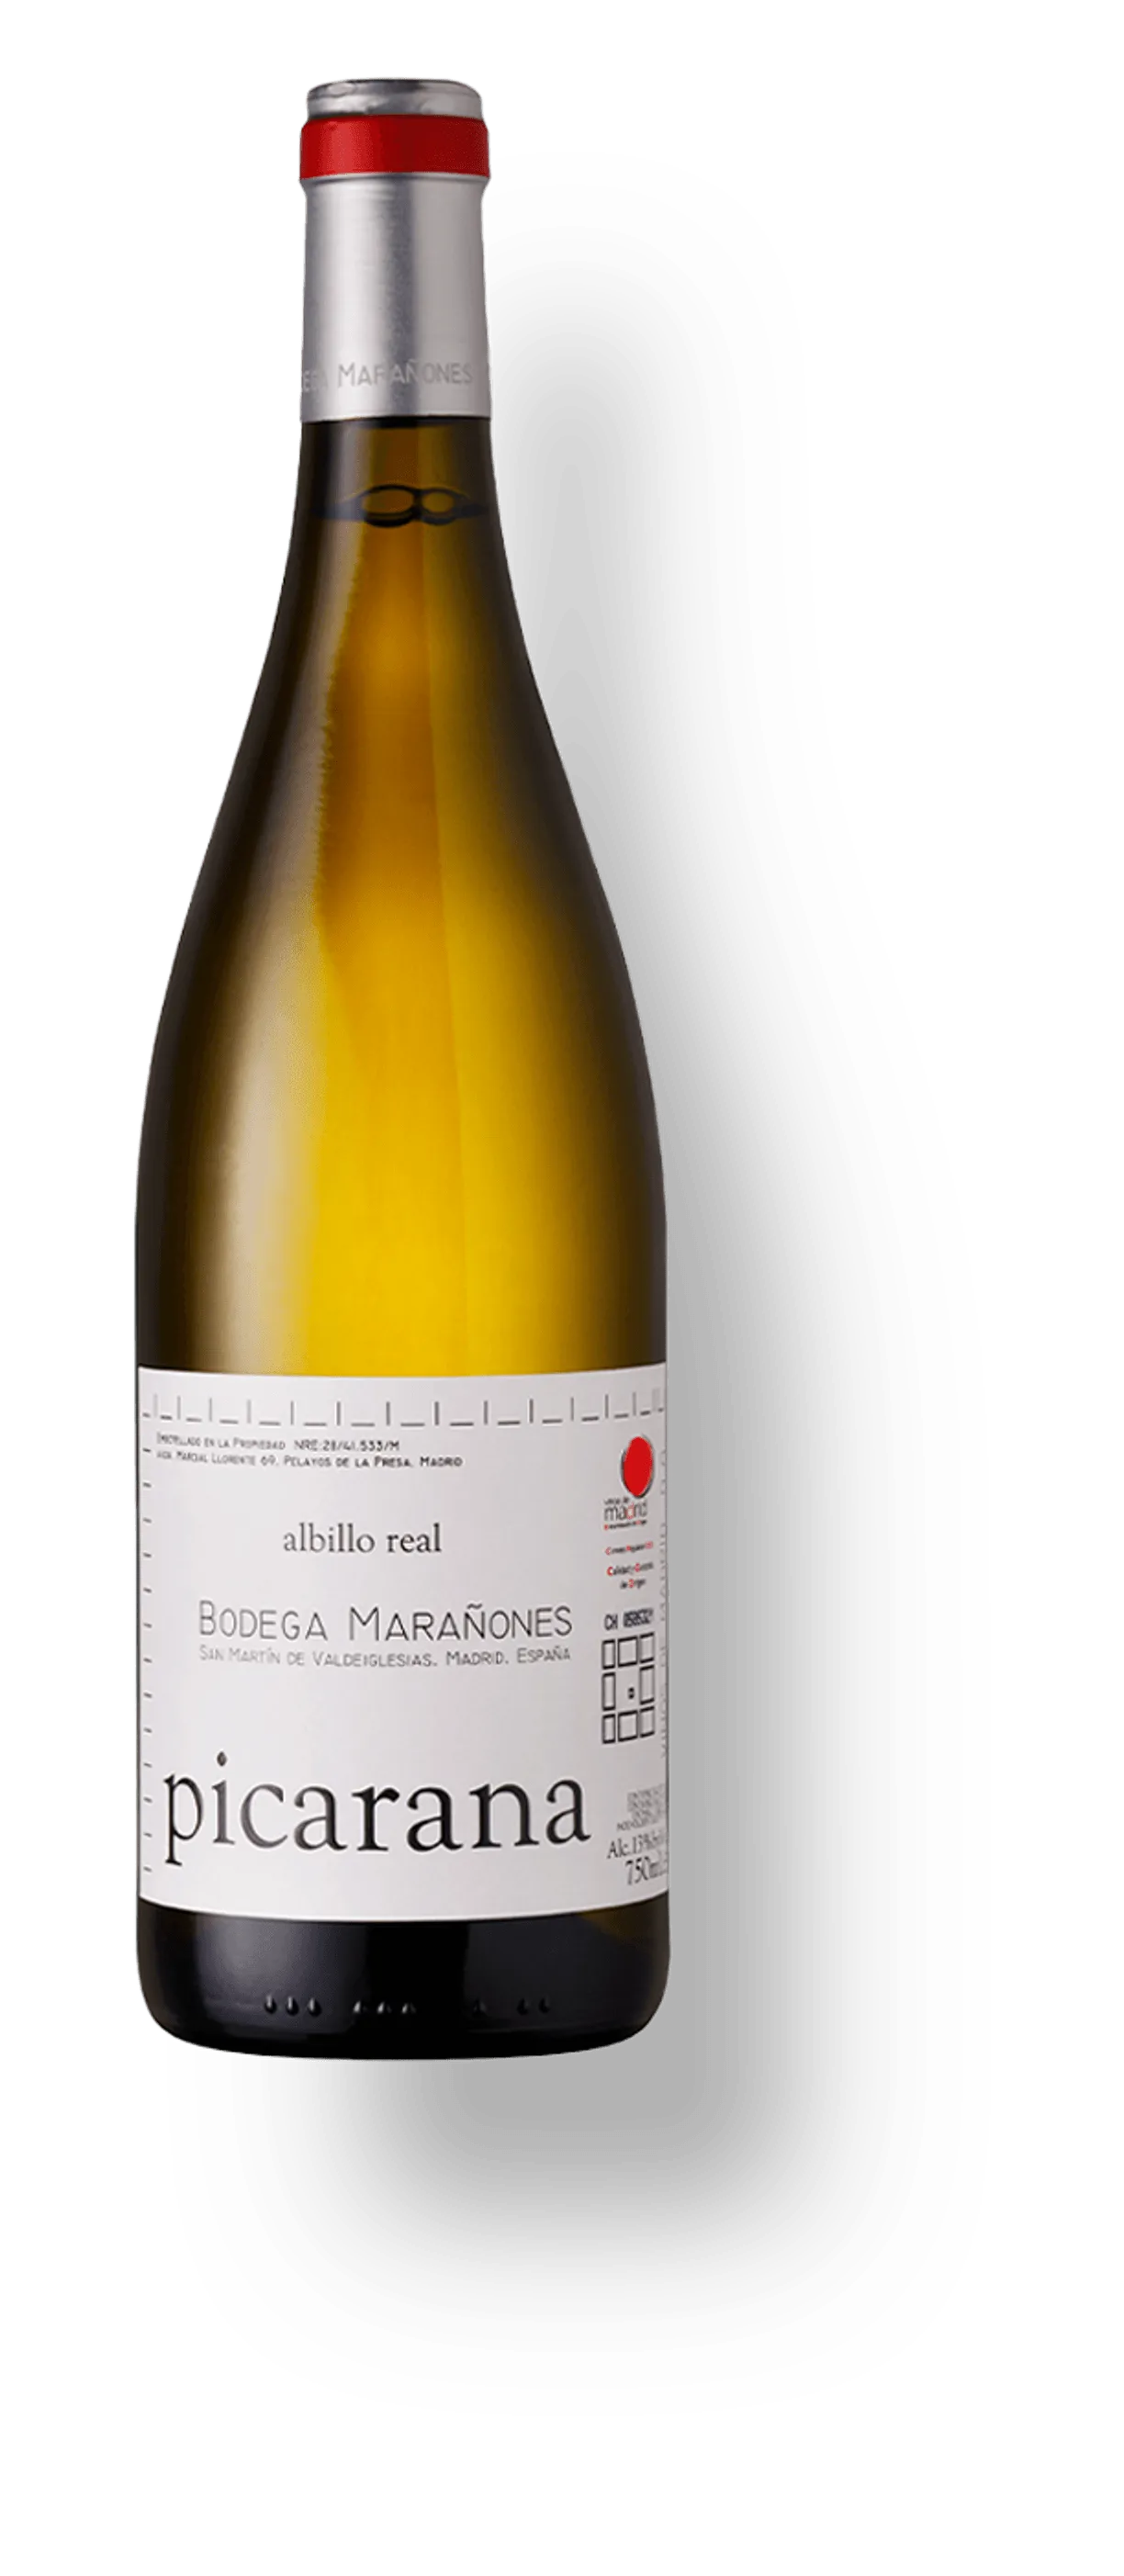 Bottle of Bodega Marañones Picarana Albillo from search results